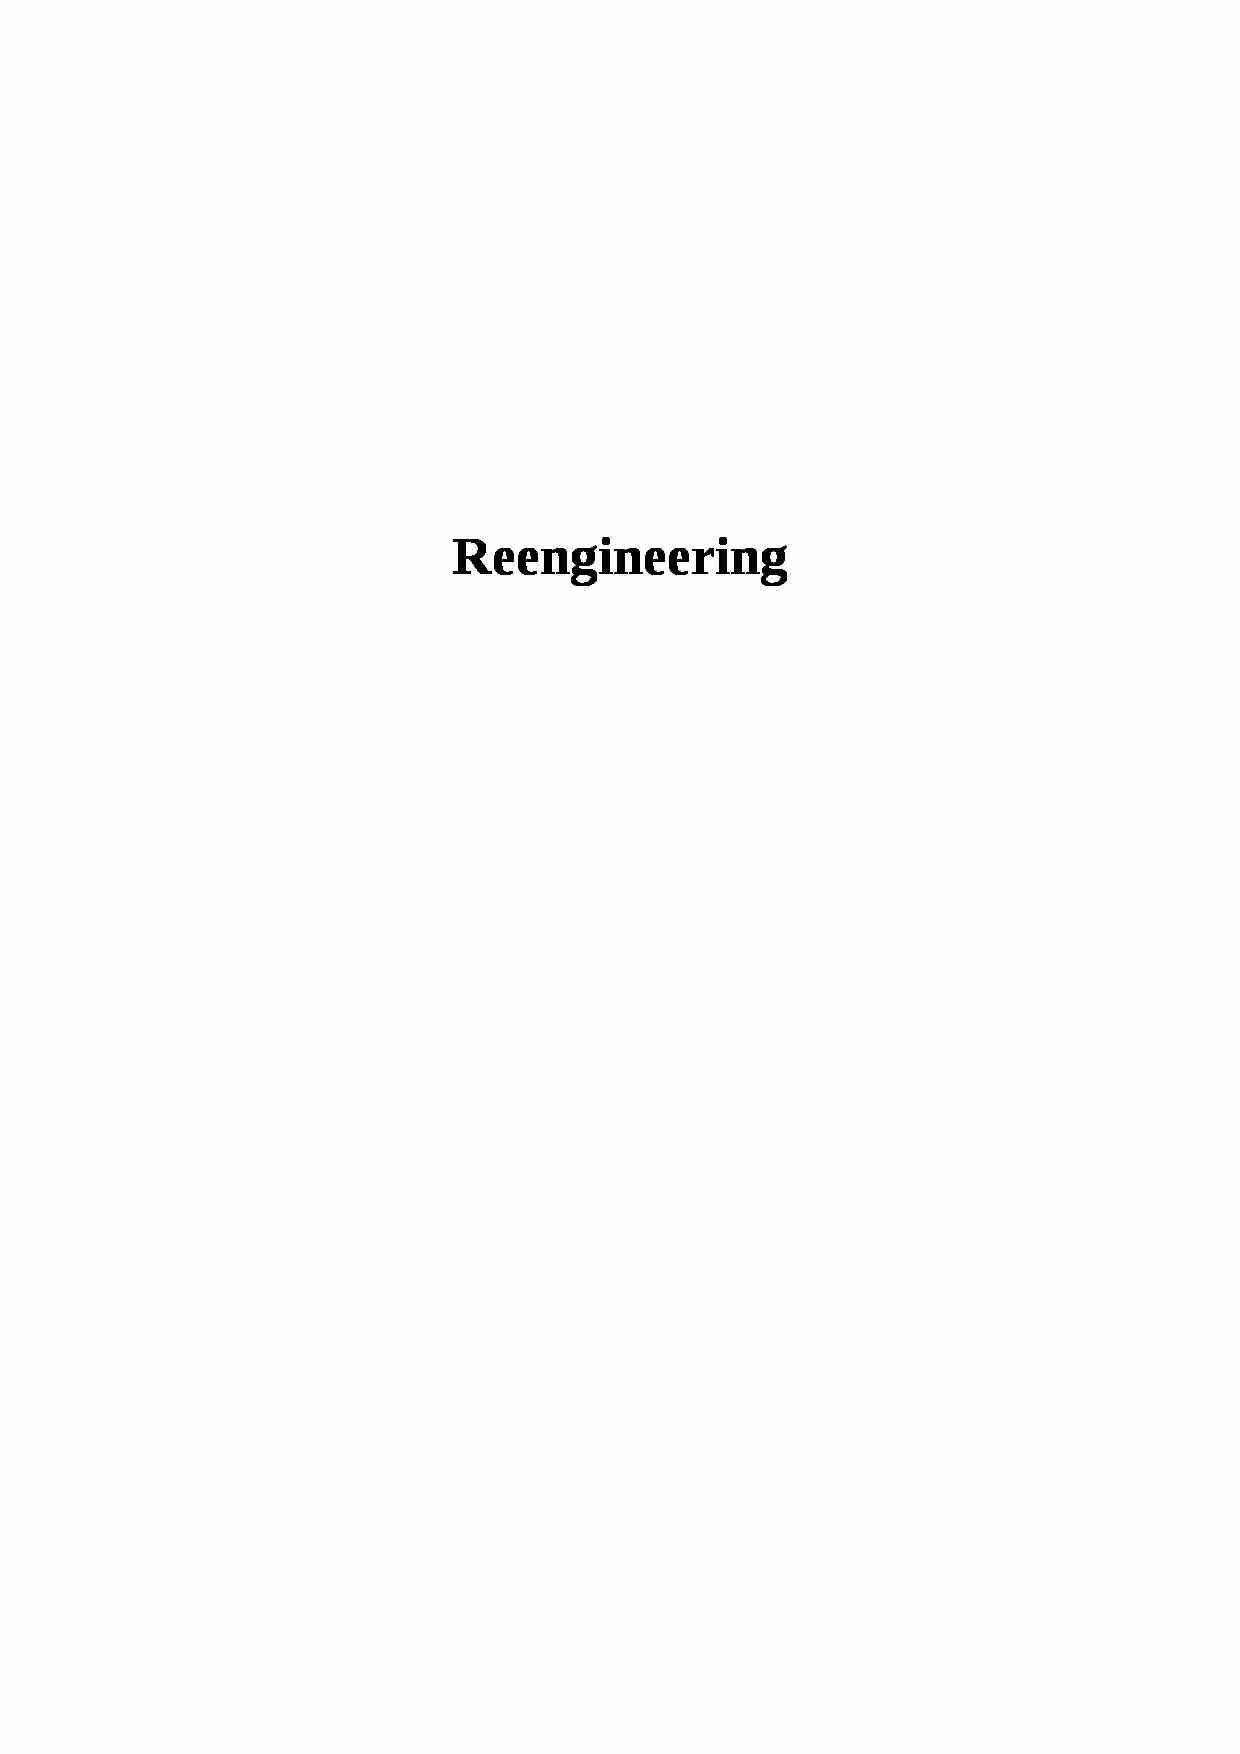 Reengineering - strona 1